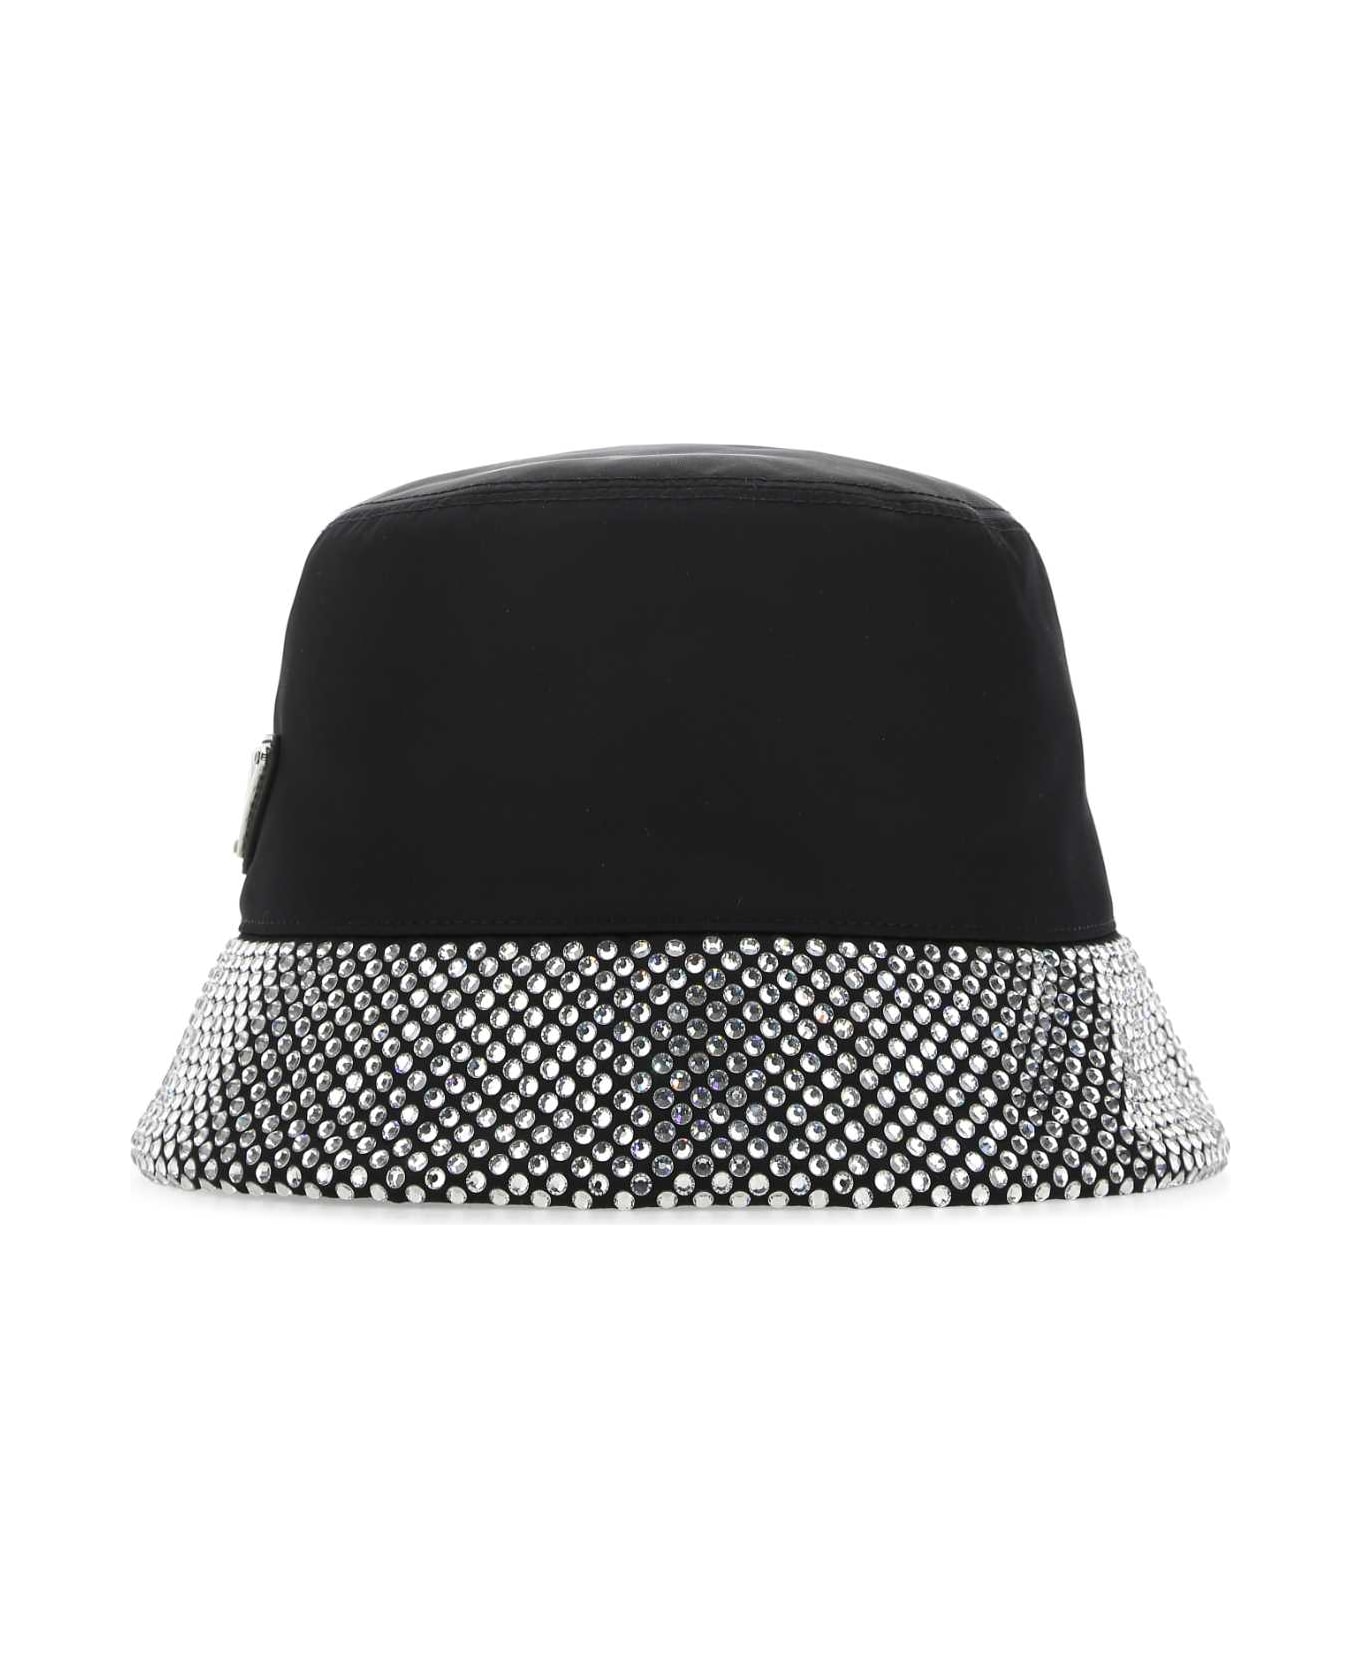 Prada Black Re-nylon Hat - F0T7O